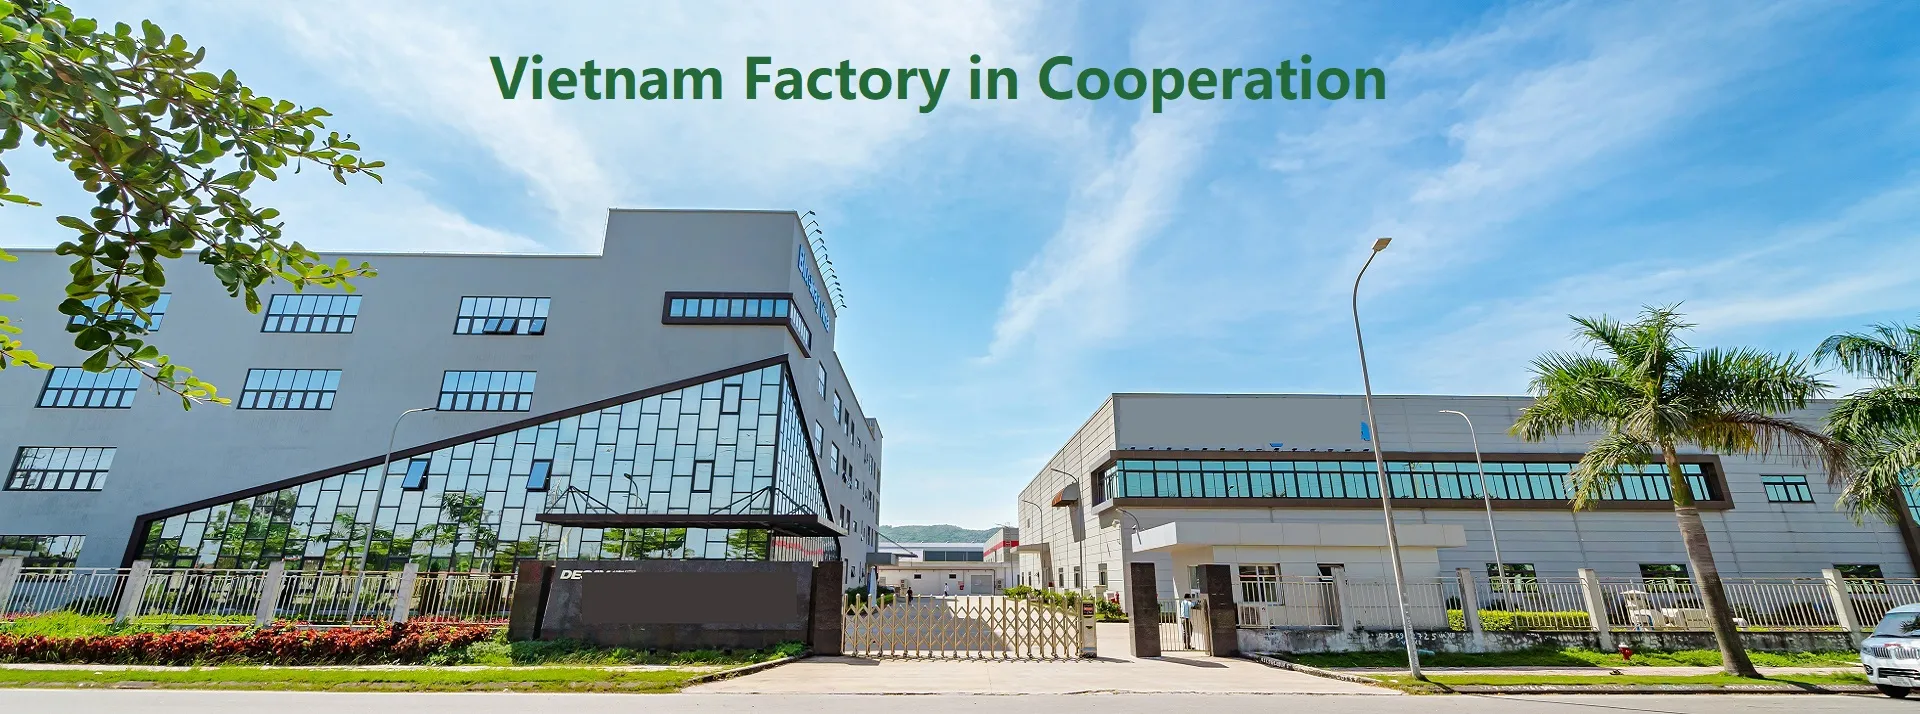 Vietnam Factory in Cooperation